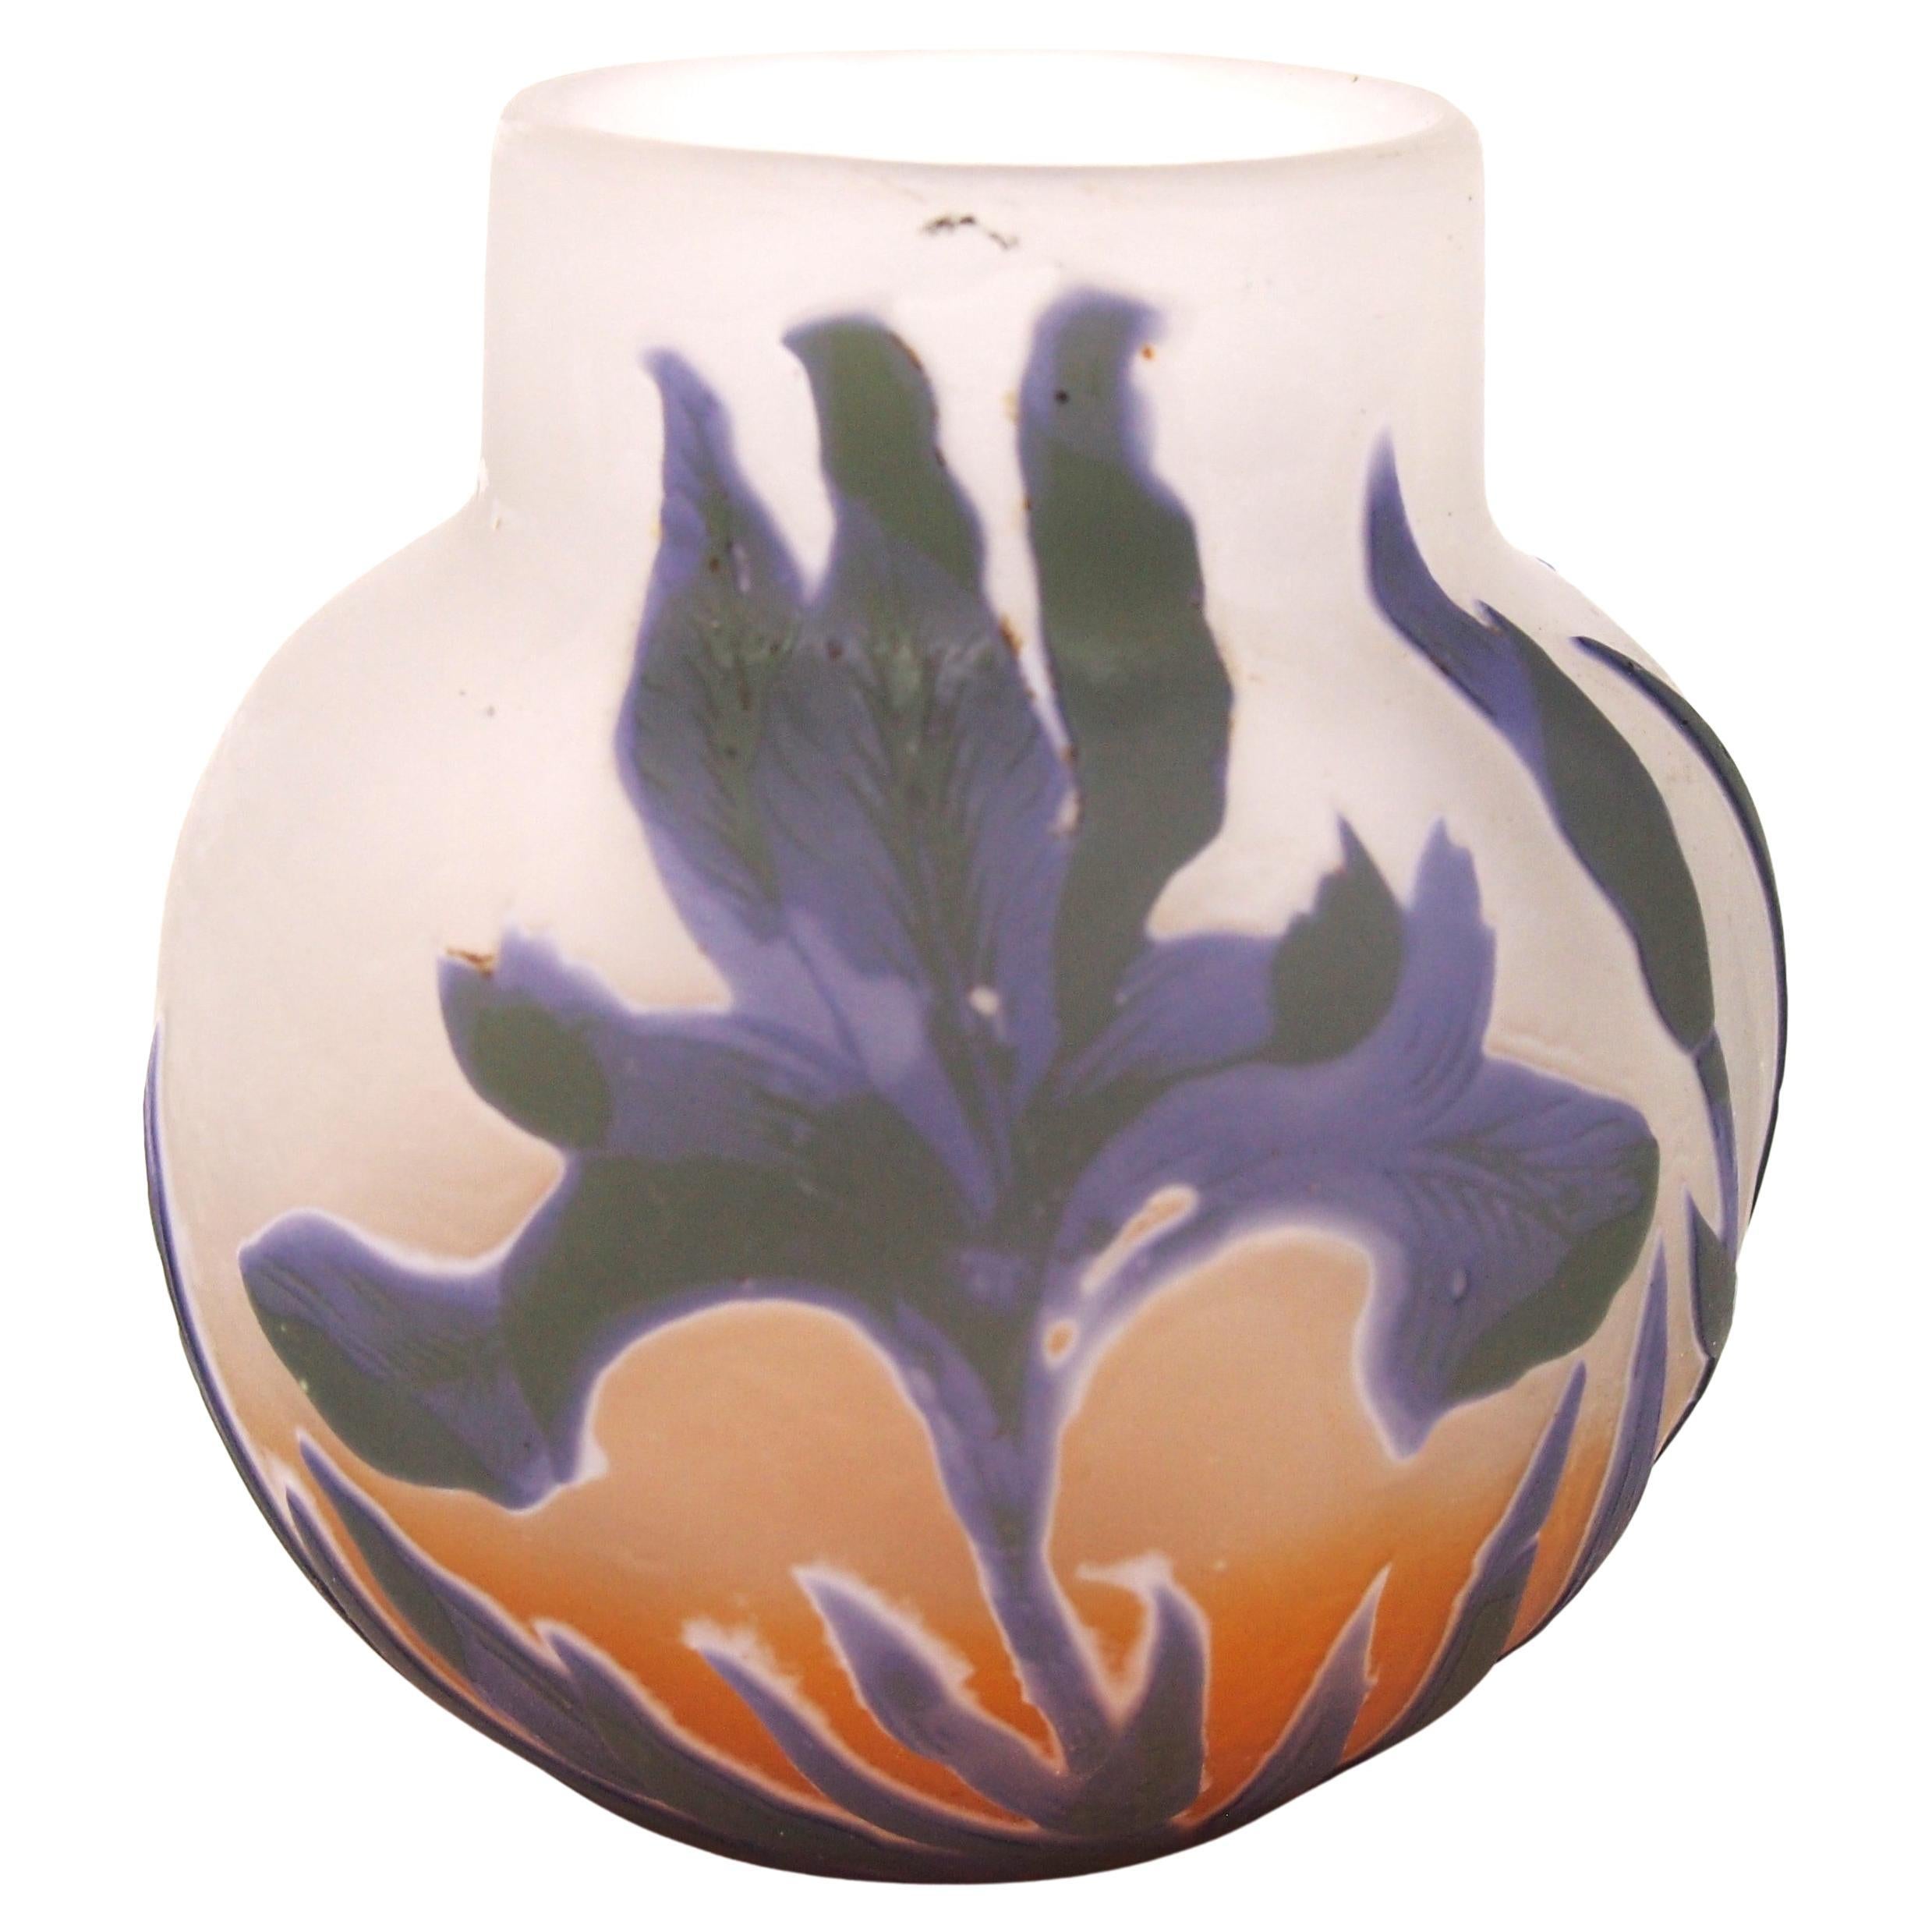 Rare French Art Nouveau 4 colour Emile Galle Cameo Glass Vase -With Irises c1908 For Sale